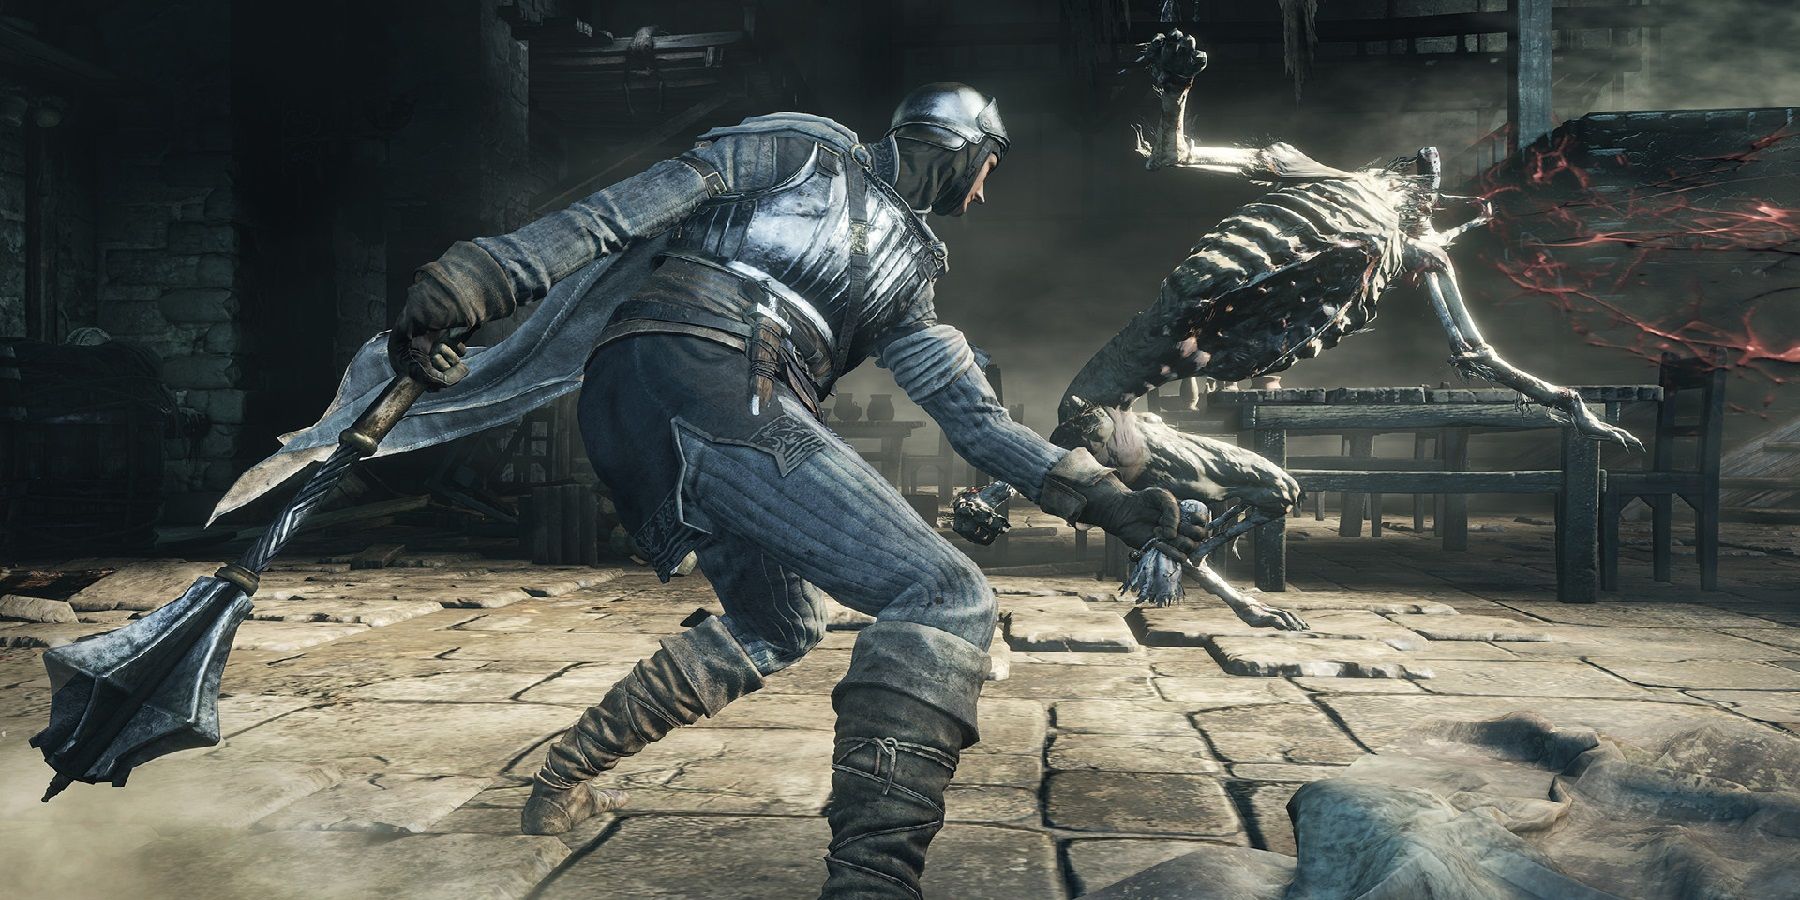 Dark Souls 3' Steam update suggests imminent multiplayer fix